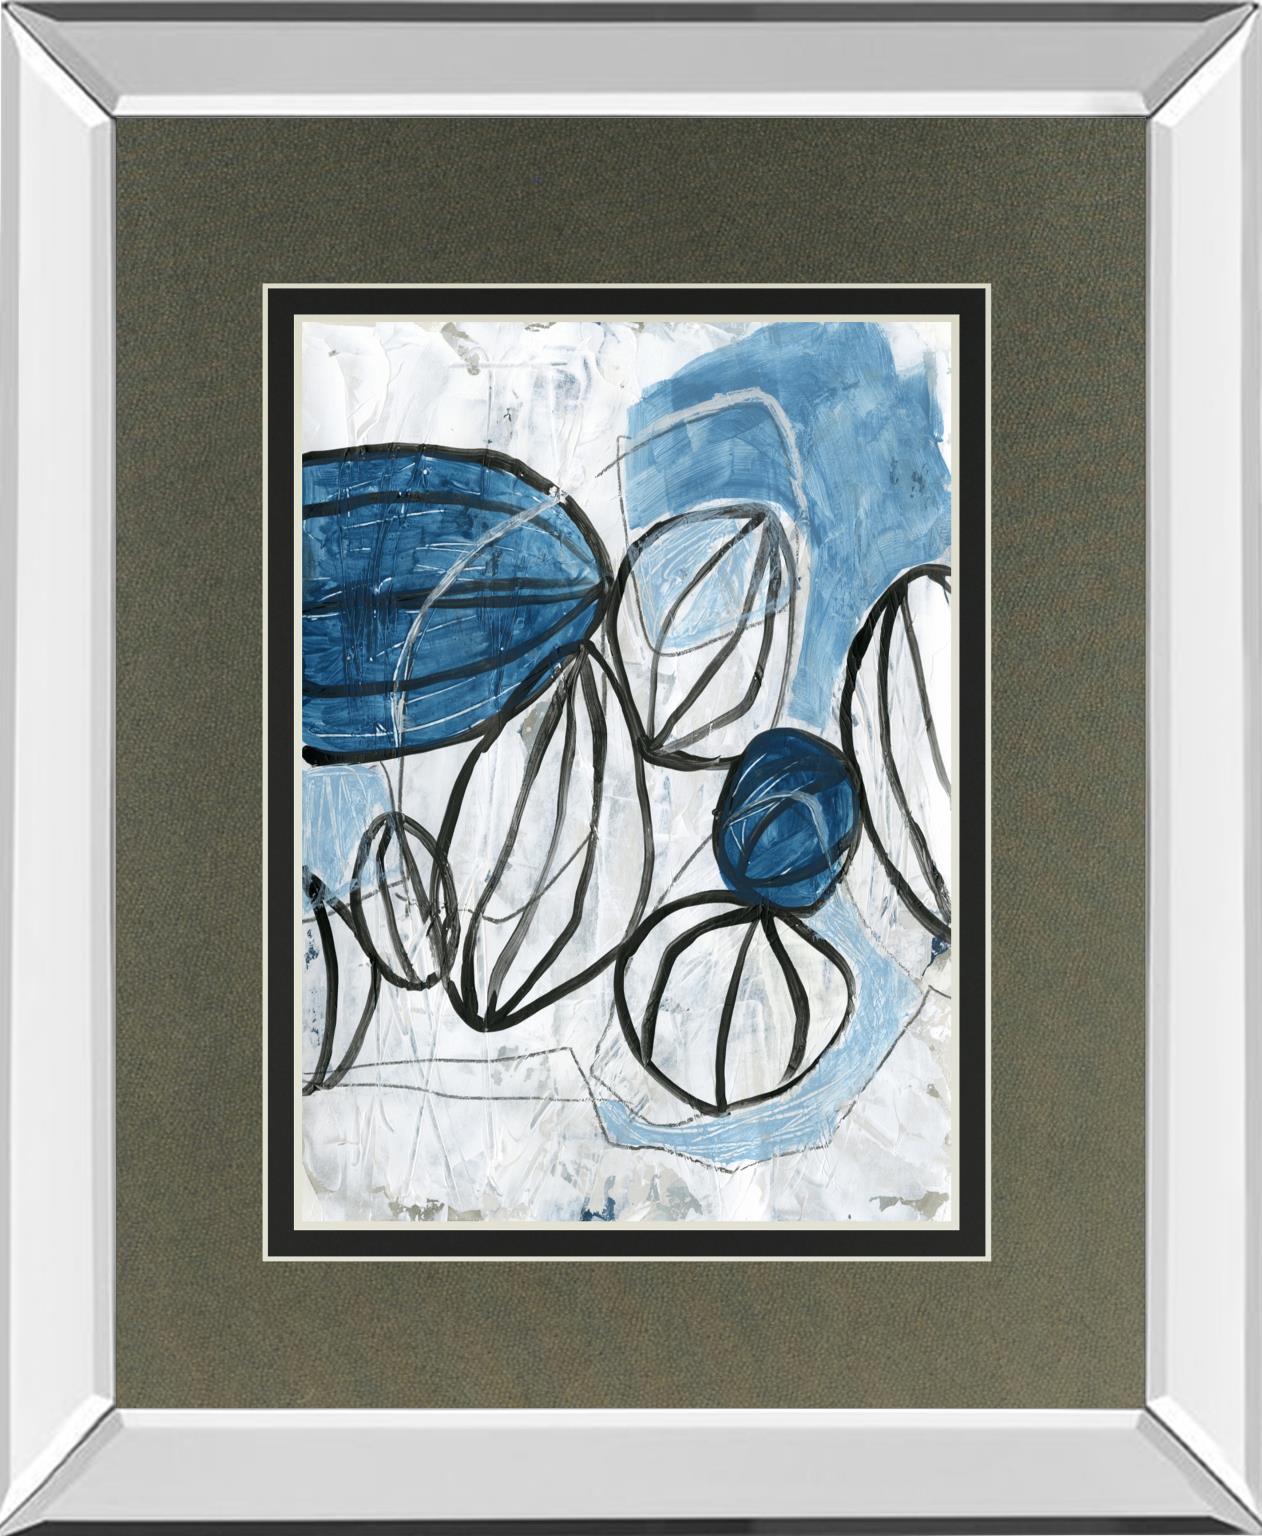 Blue Lanterns II By June Erica Vess, Mirrored Frame - Light Blue - Premium Mirrored Frames from Classy Art - Just $274.88! Shop now at brett interiors